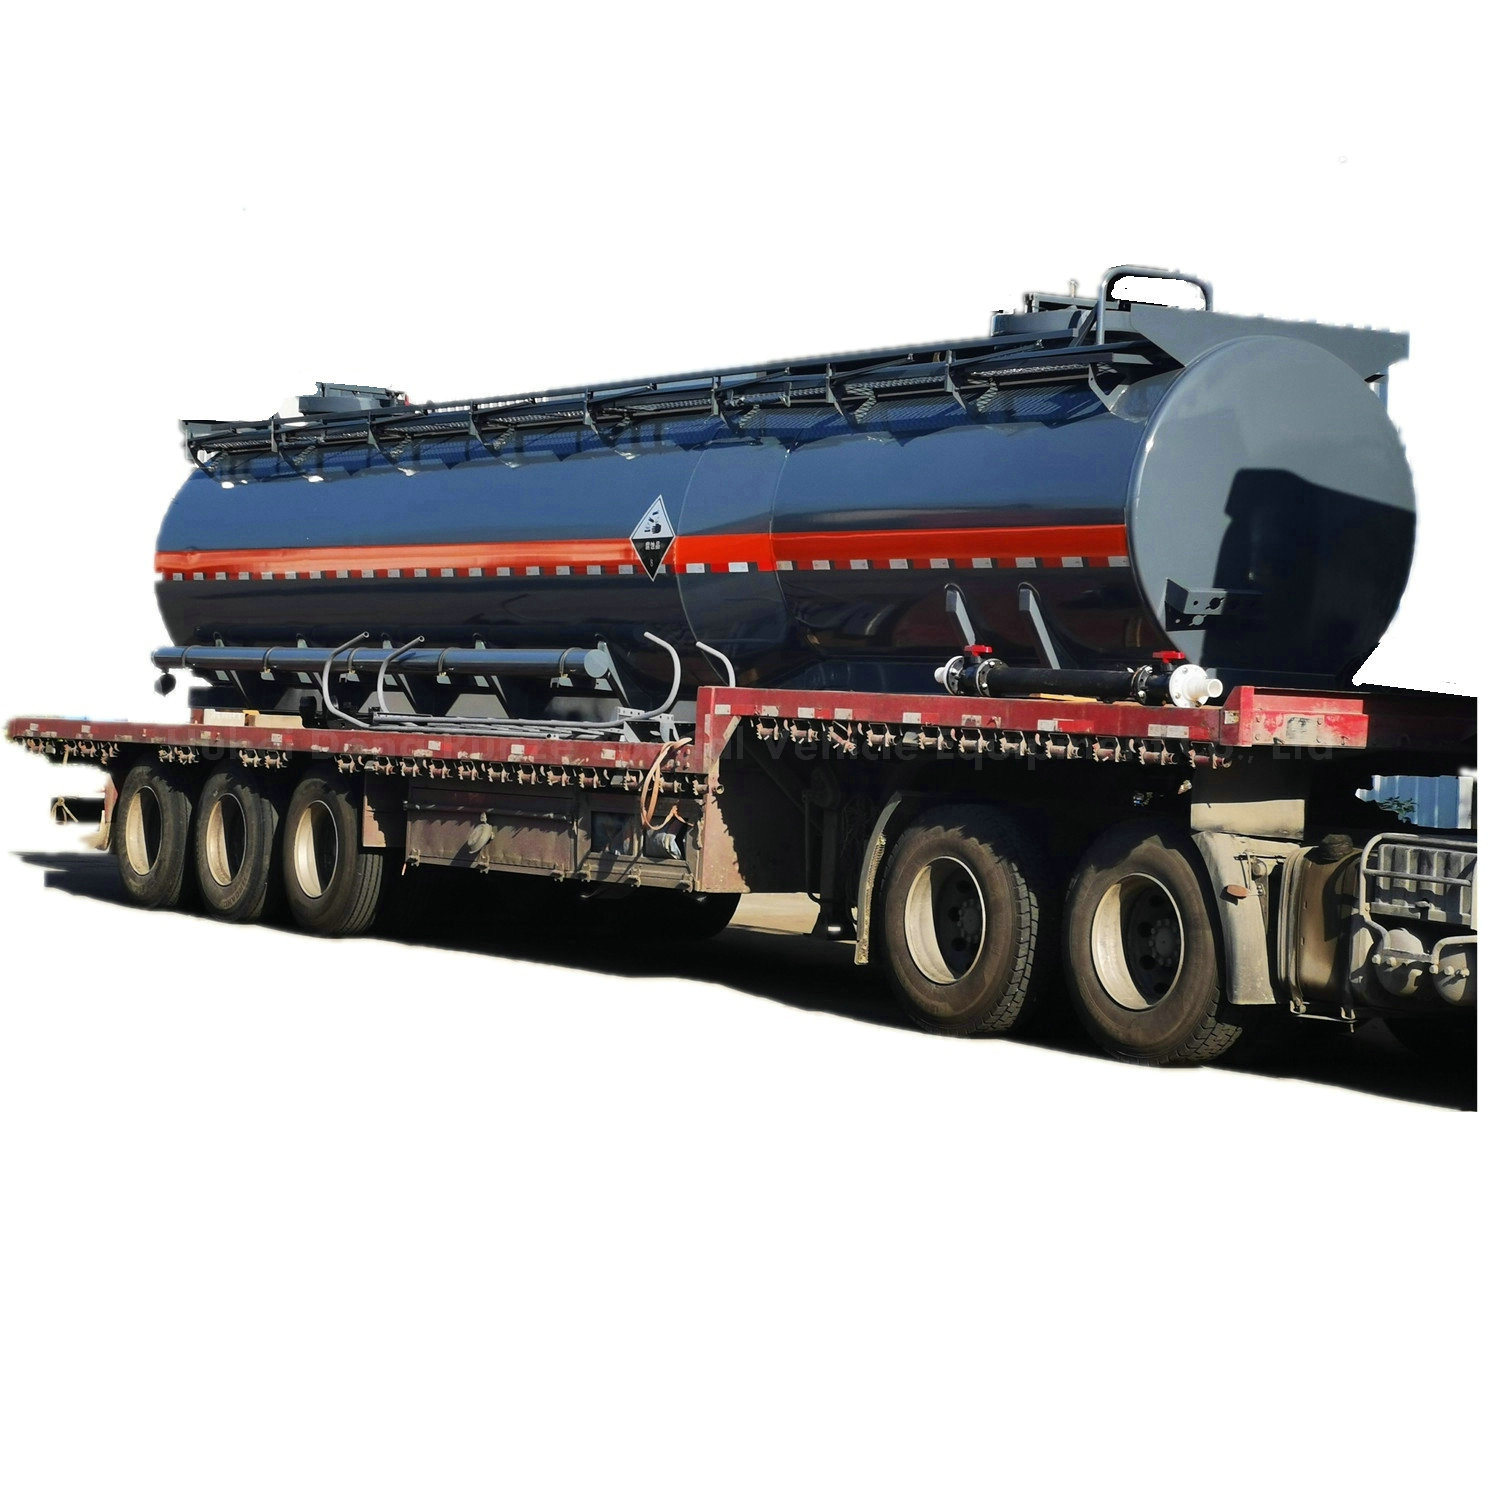 28KL PE Lined Tank SKD for Petrochemicals CorrosiveHydrochloric Acid HCl Sulphuric Acid Chemical Liquid Trailer Transport 